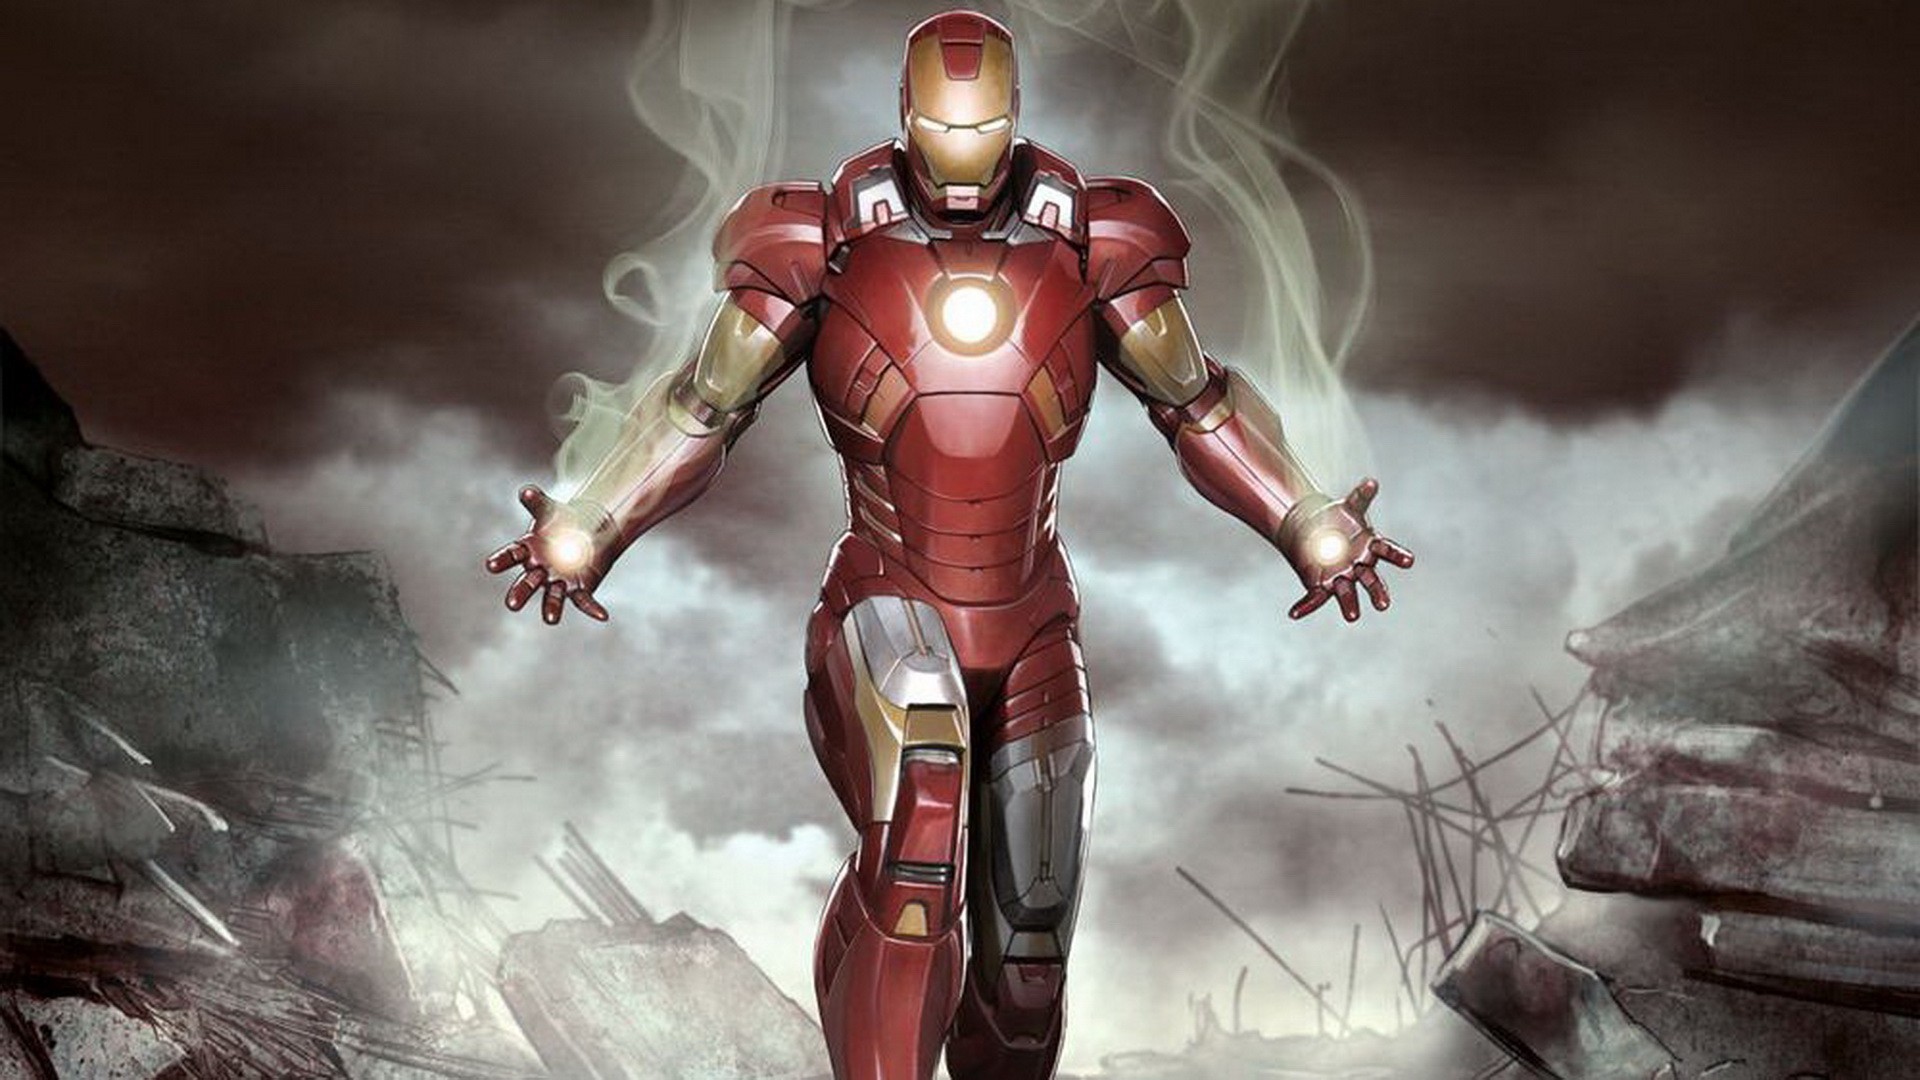 Iron Man comic cartoon wallpaper HD | PixelsTalk.Net